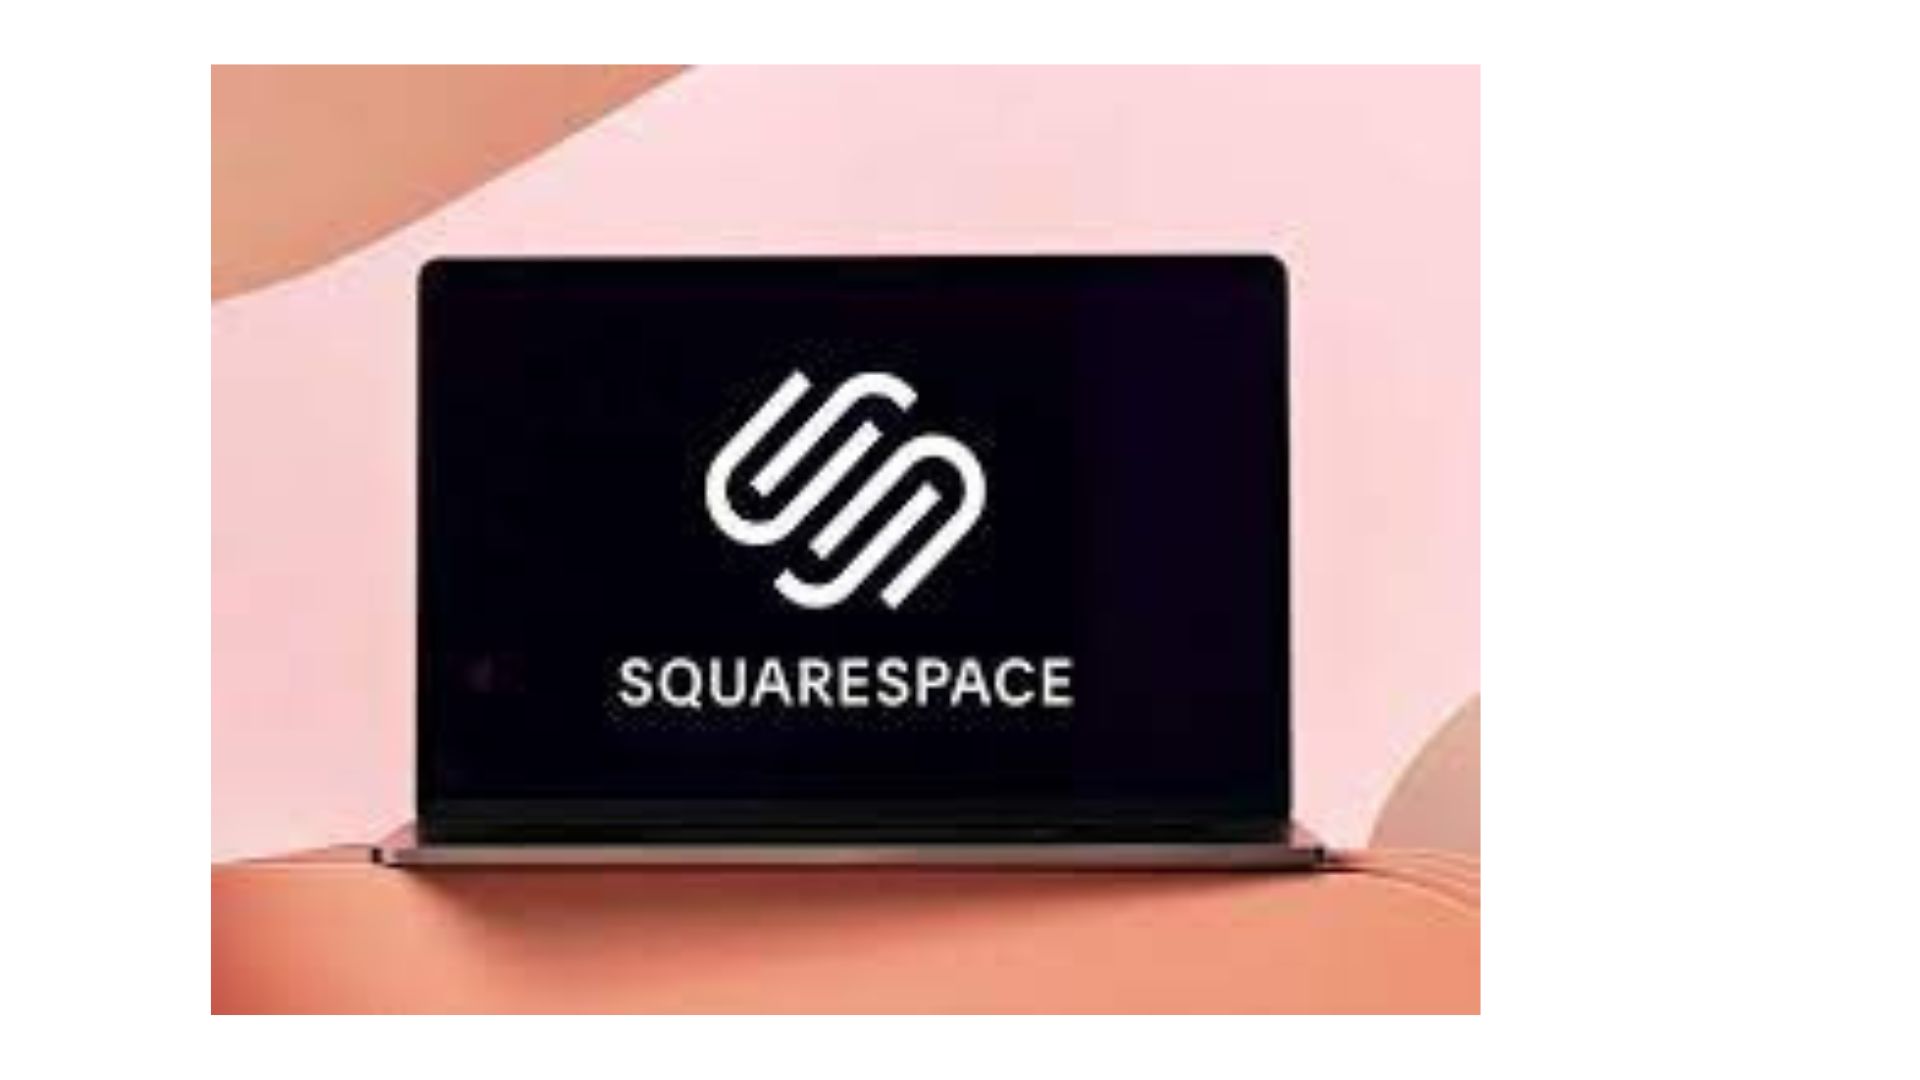 Squarespace ipoann azevedotechcrunch